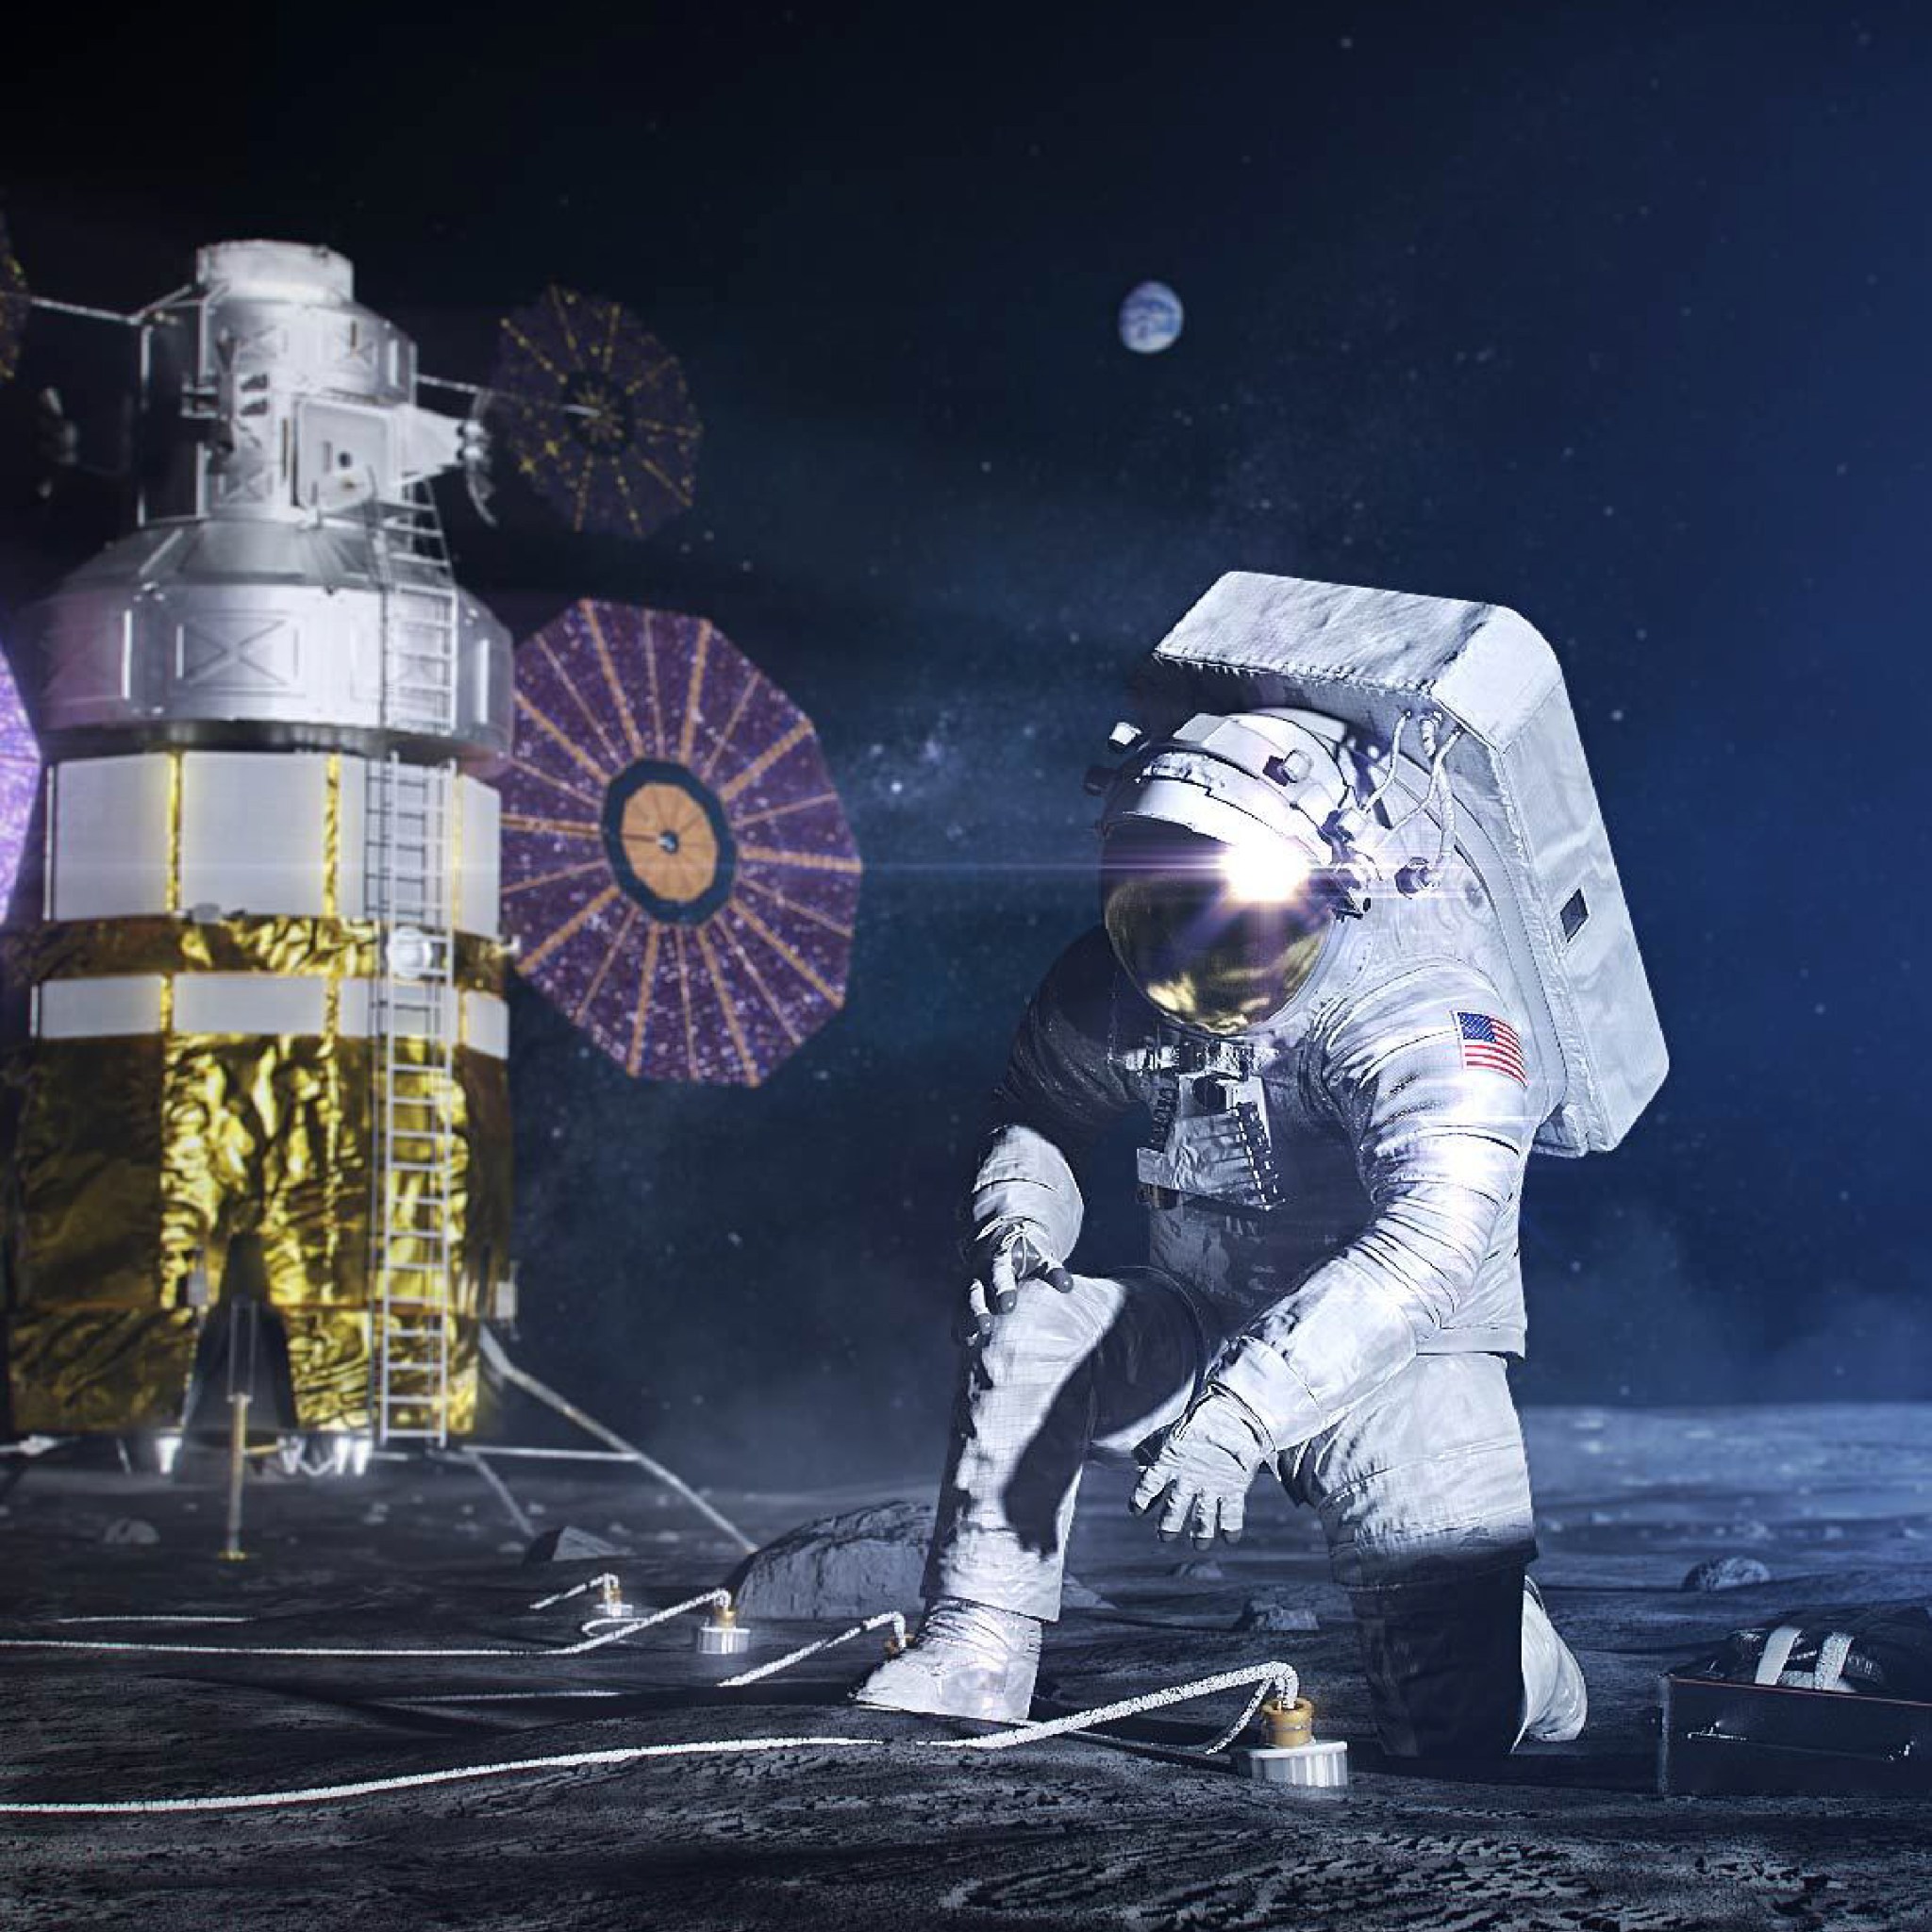 Artist rendering of astronaut working on the moon.